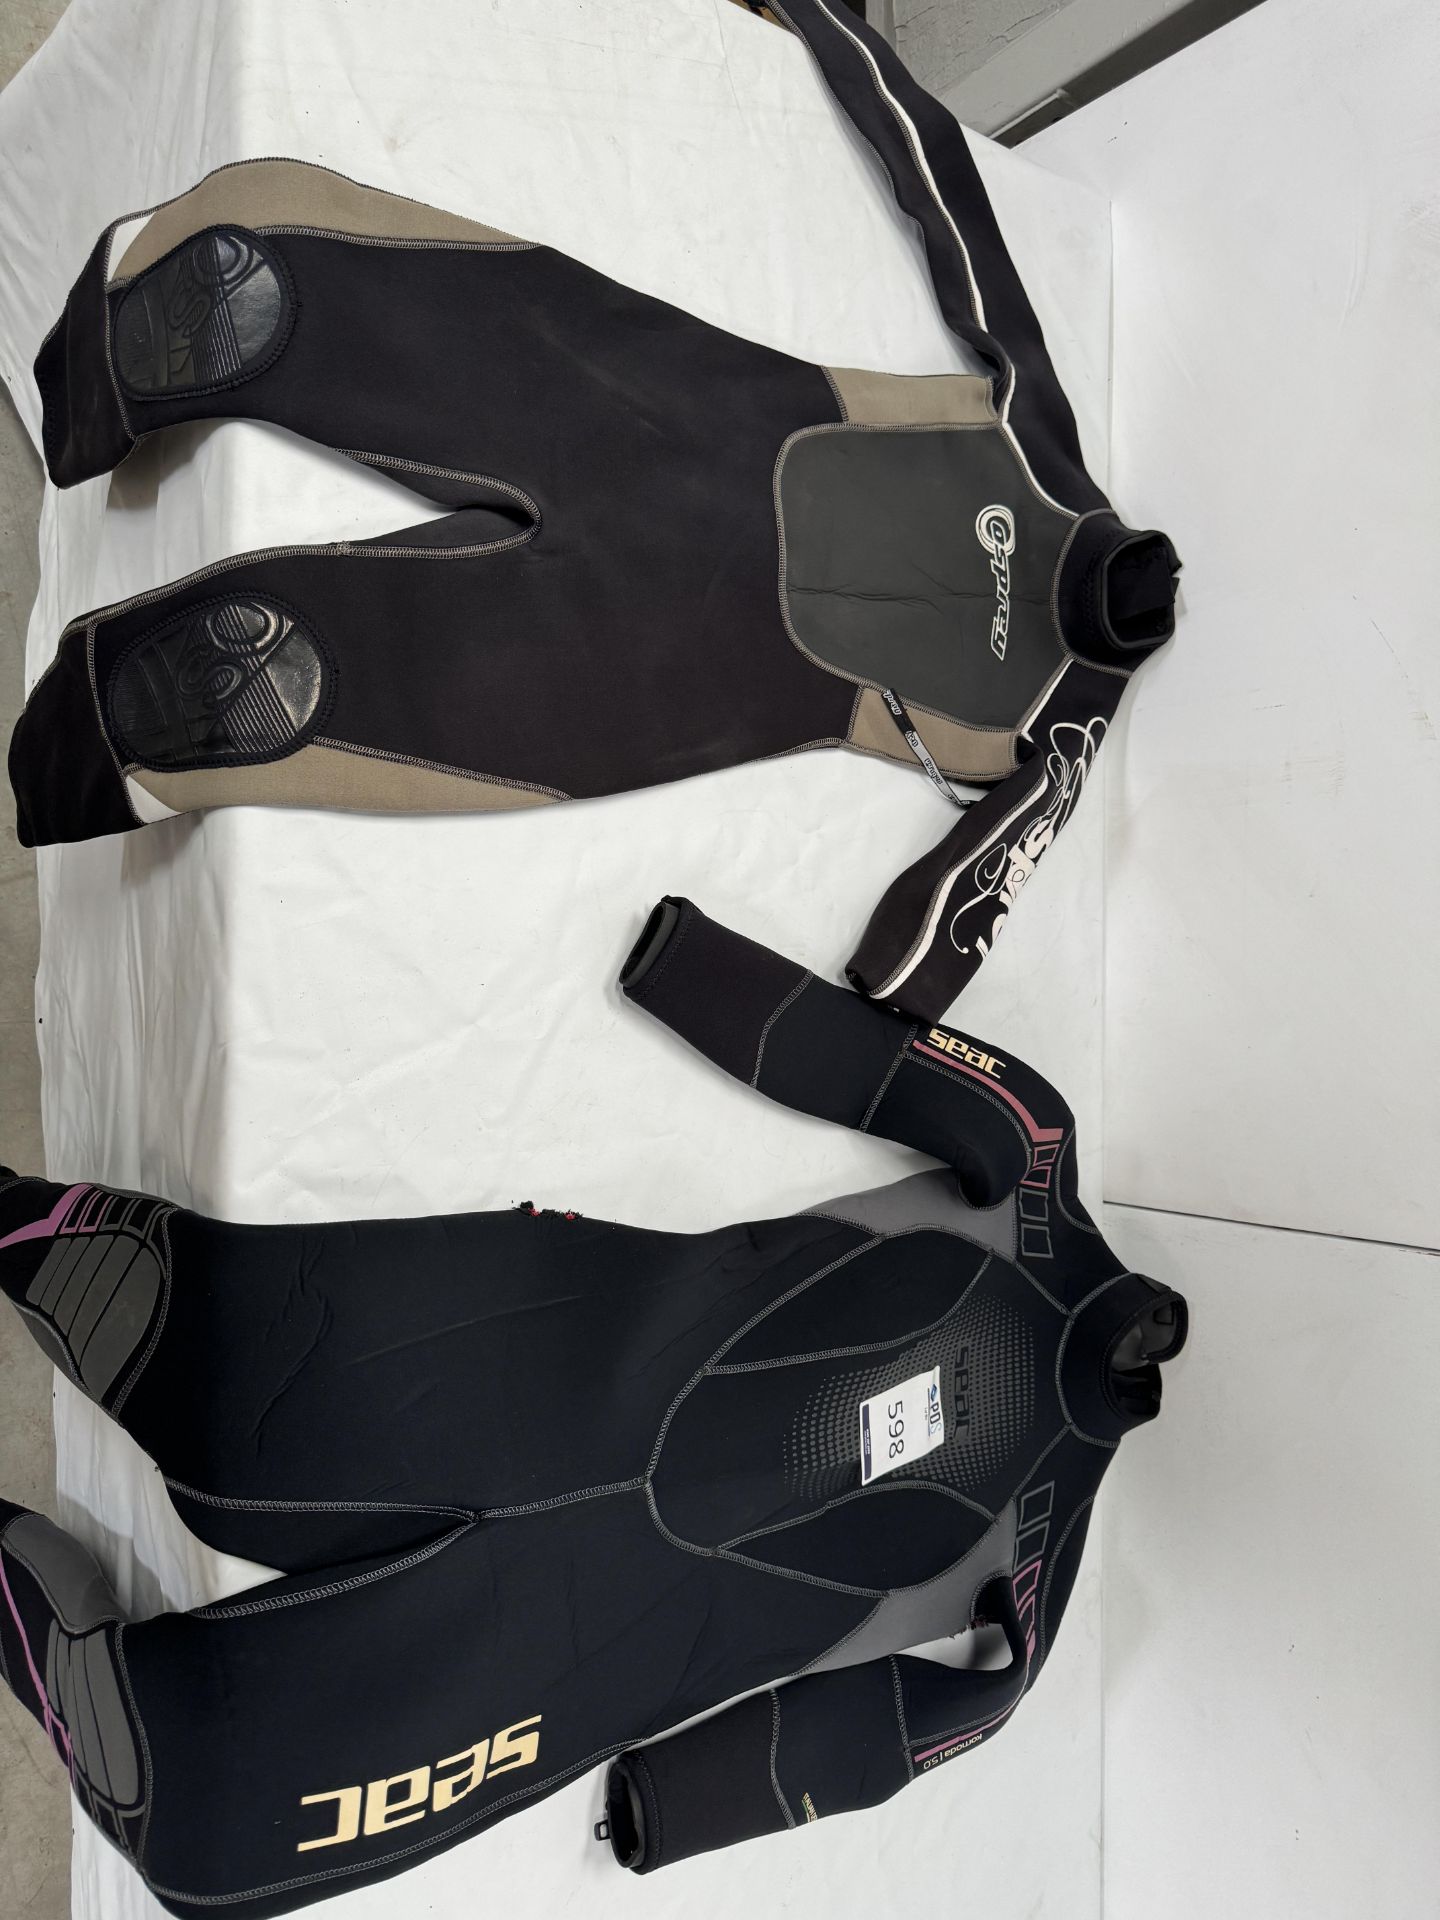 Kids Osprey Wetsuit, Aqua Lung Woman’s Wetsuit (Size M), Beuchat & Seac Wetsuits (Location: